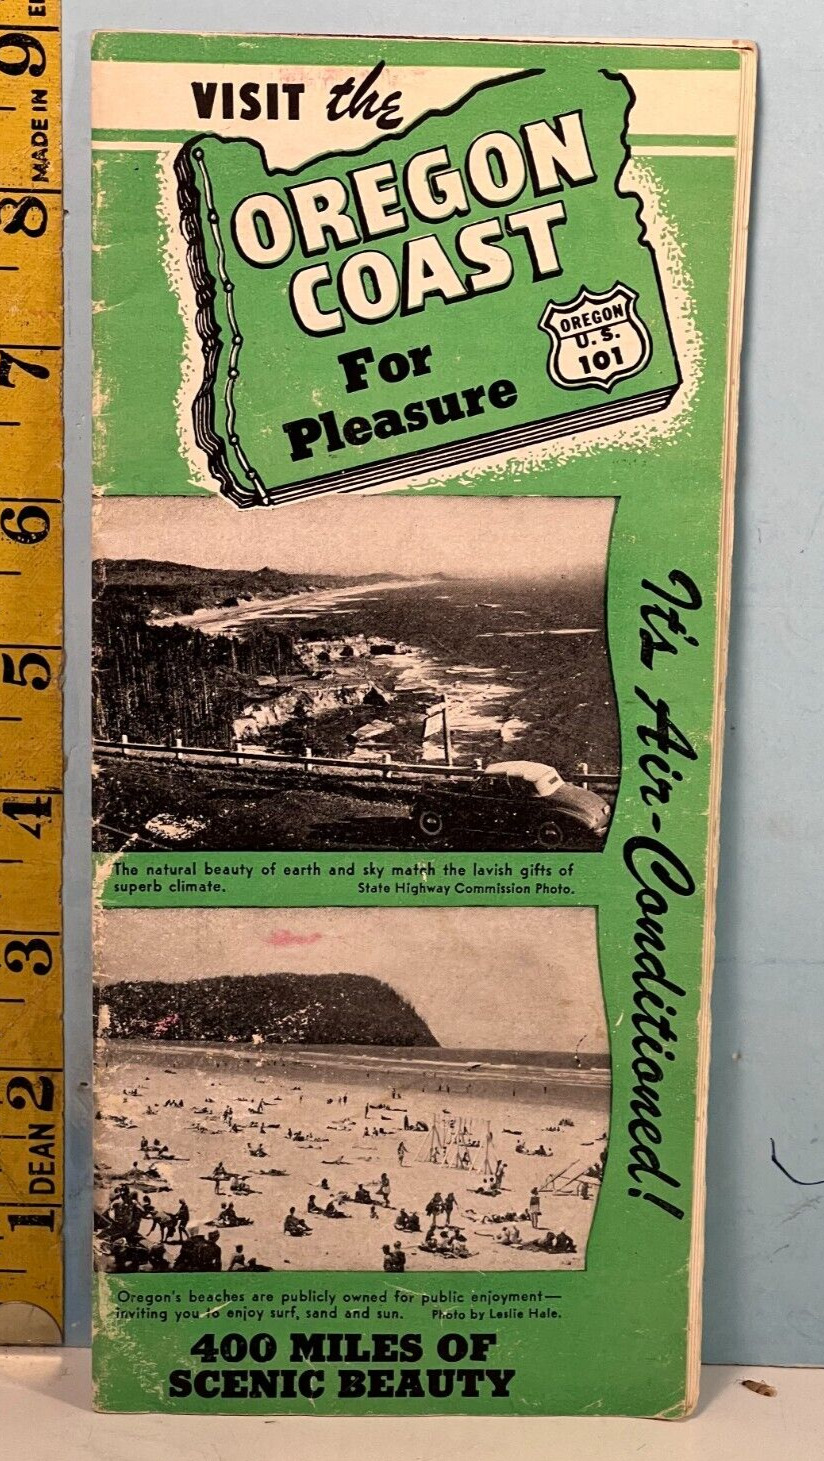 1950's Visit the Oregon Coast US 101 Travel Brochure